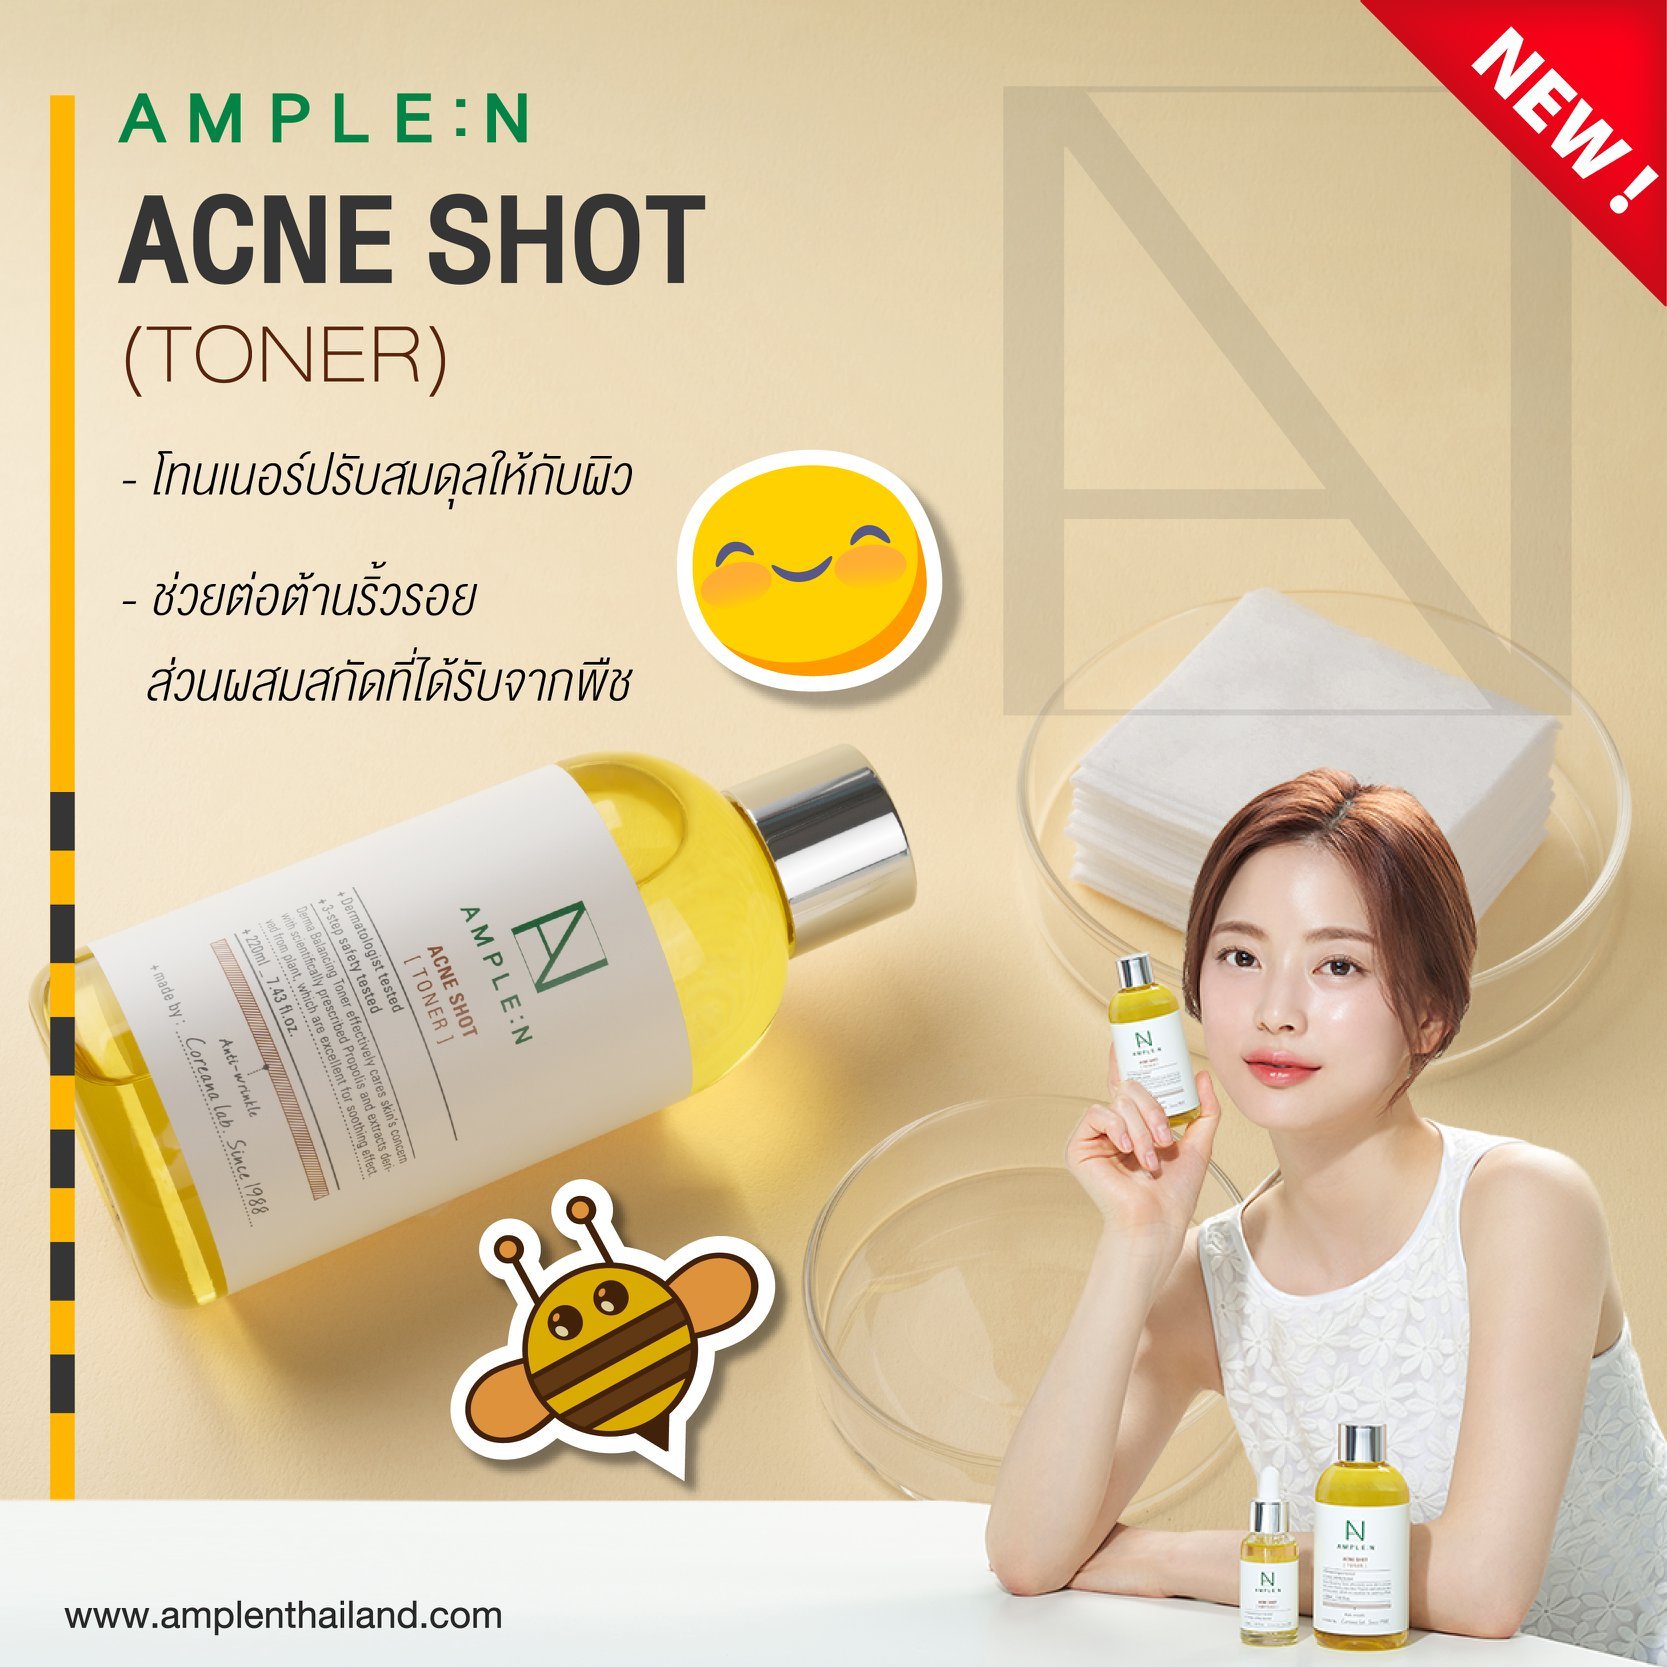 AMPLE:N Acne Shot Toner 220 ml